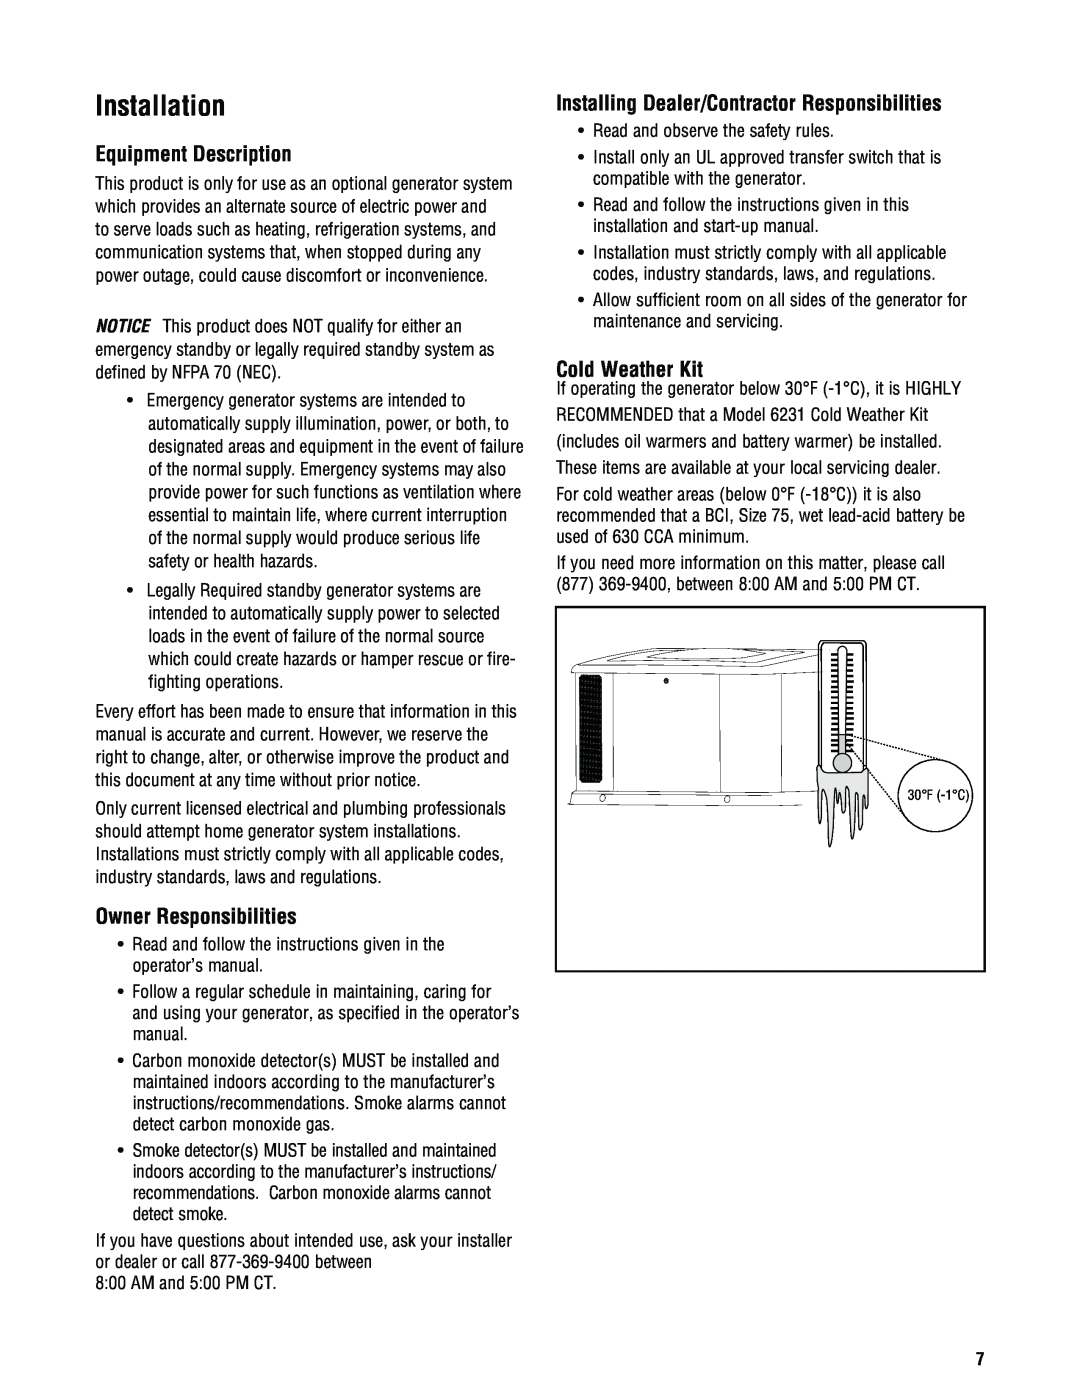 Rheem Rheem / Ruud standby generator Installation, Equipment Description, Owner Responsibilities, Cold Weather Kit 